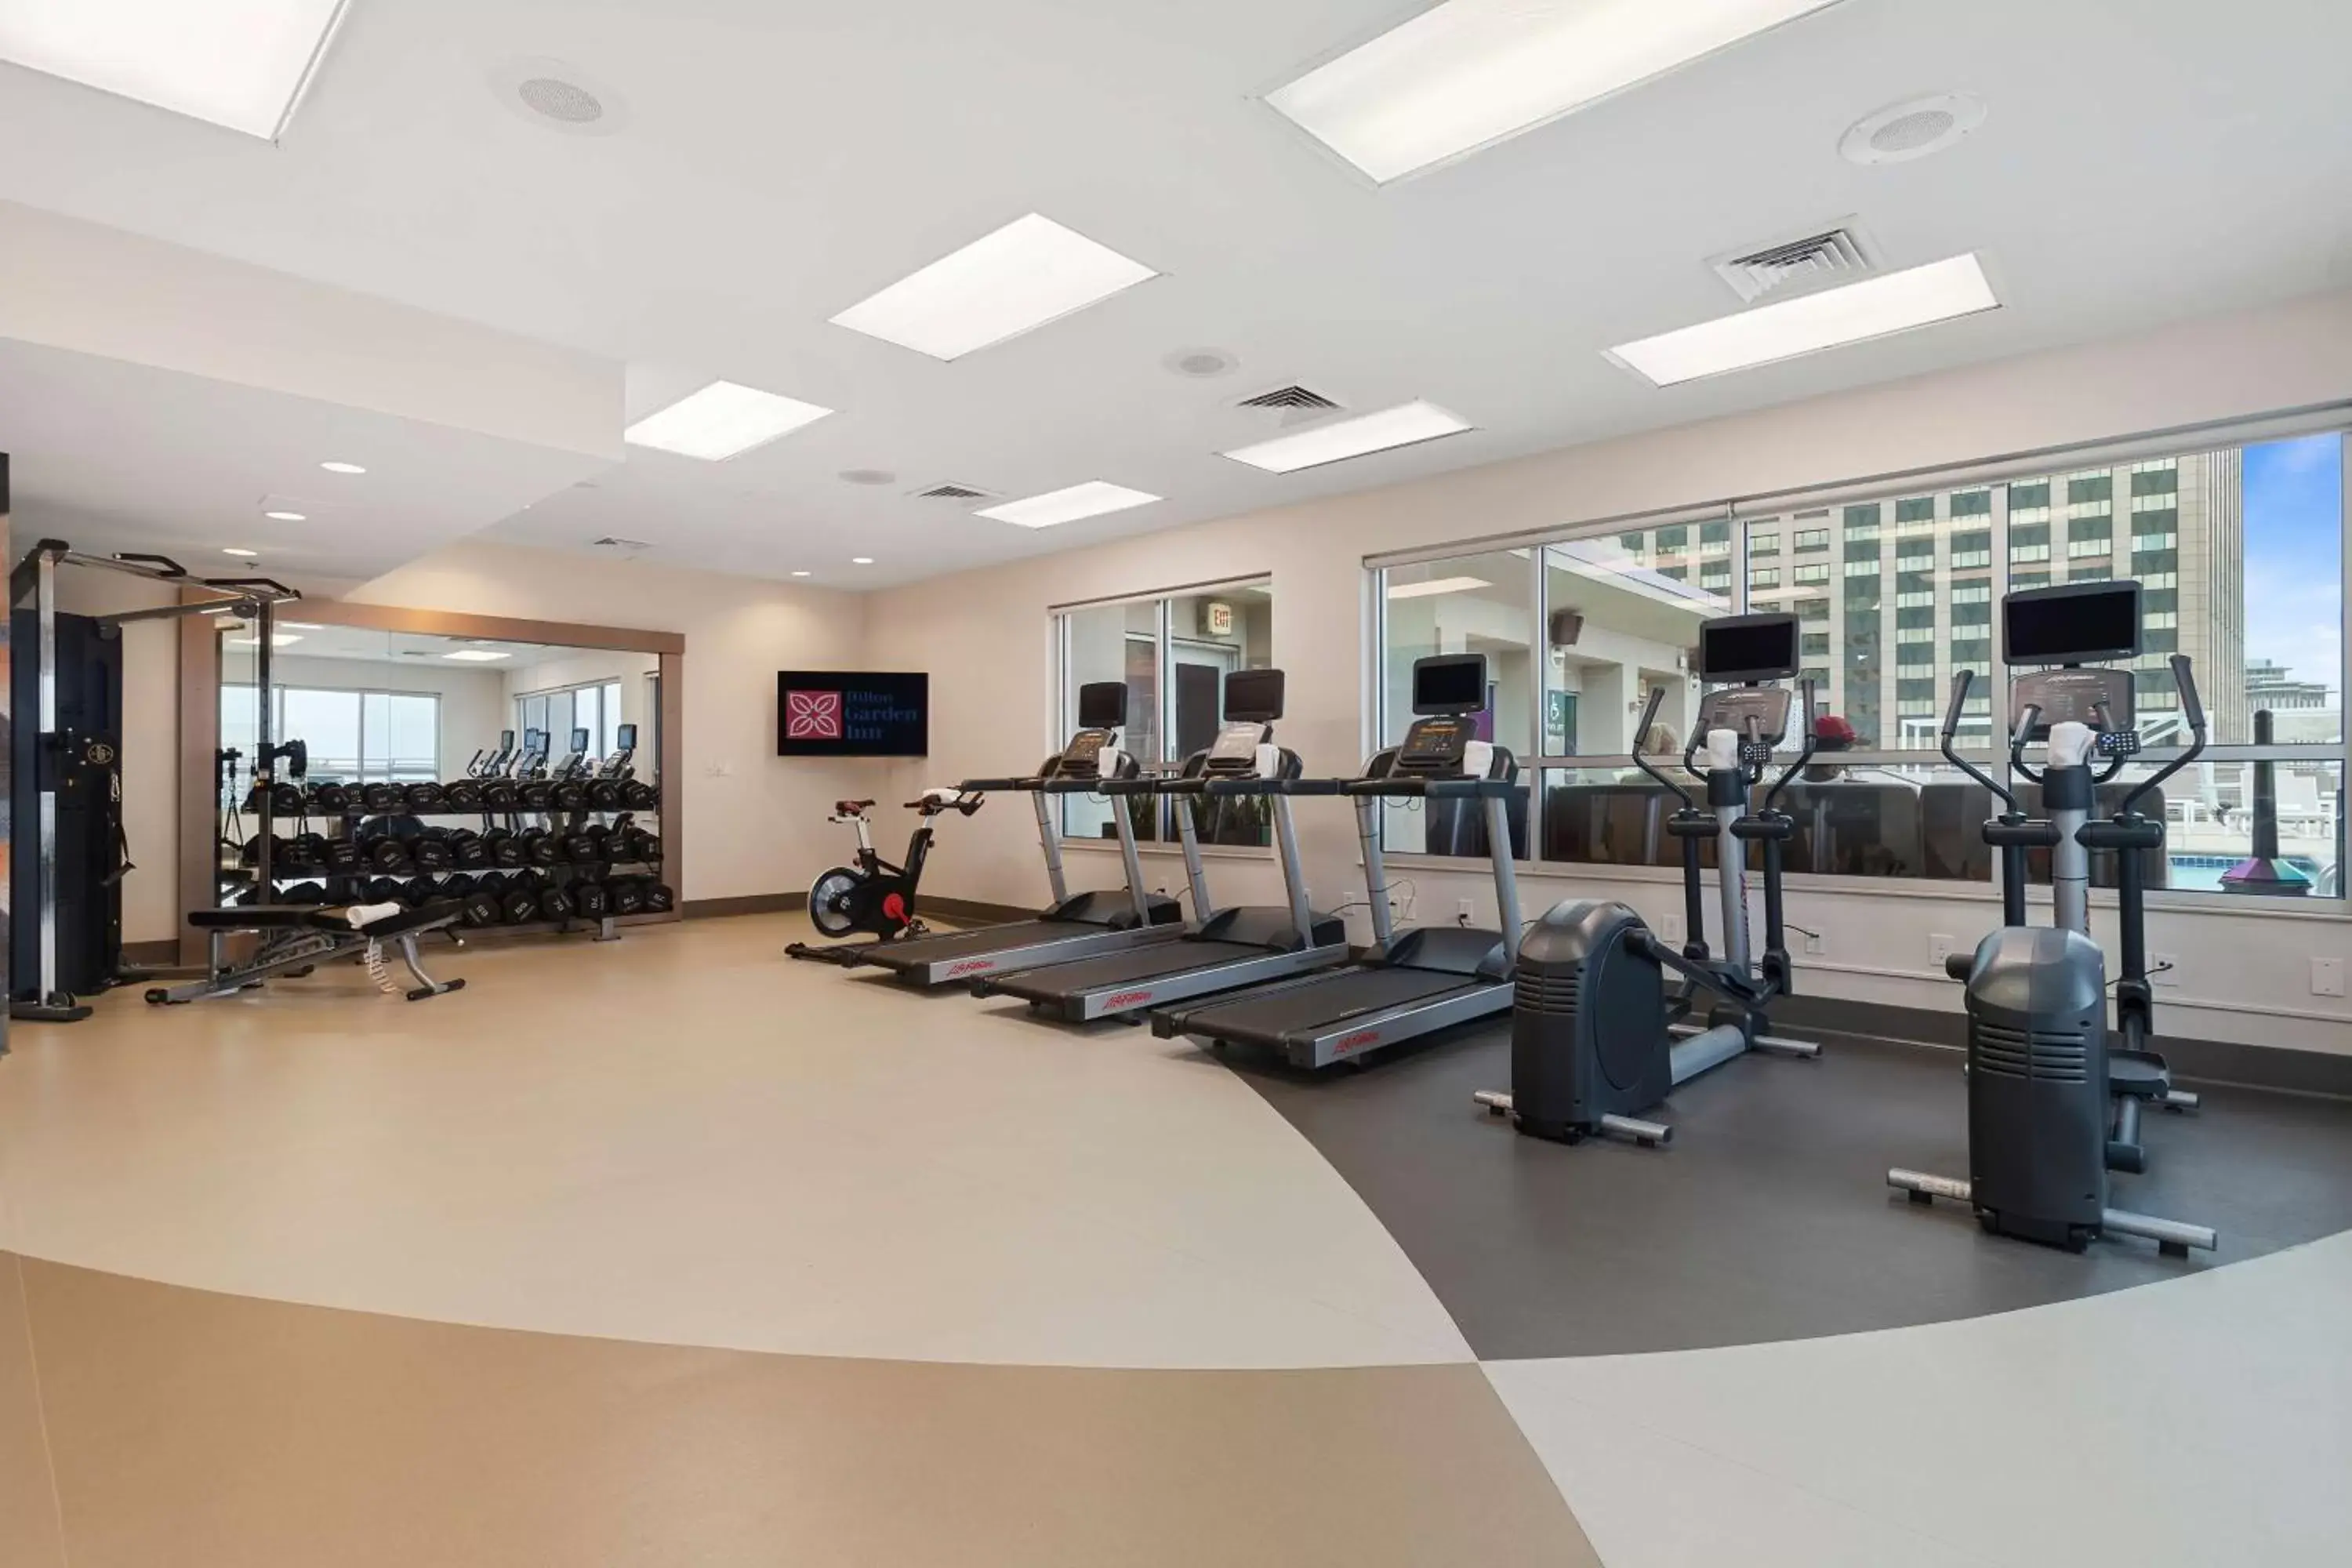 Fitness centre/facilities, Fitness Center/Facilities in Hilton Garden Inn New Orleans French Quarter/CBD